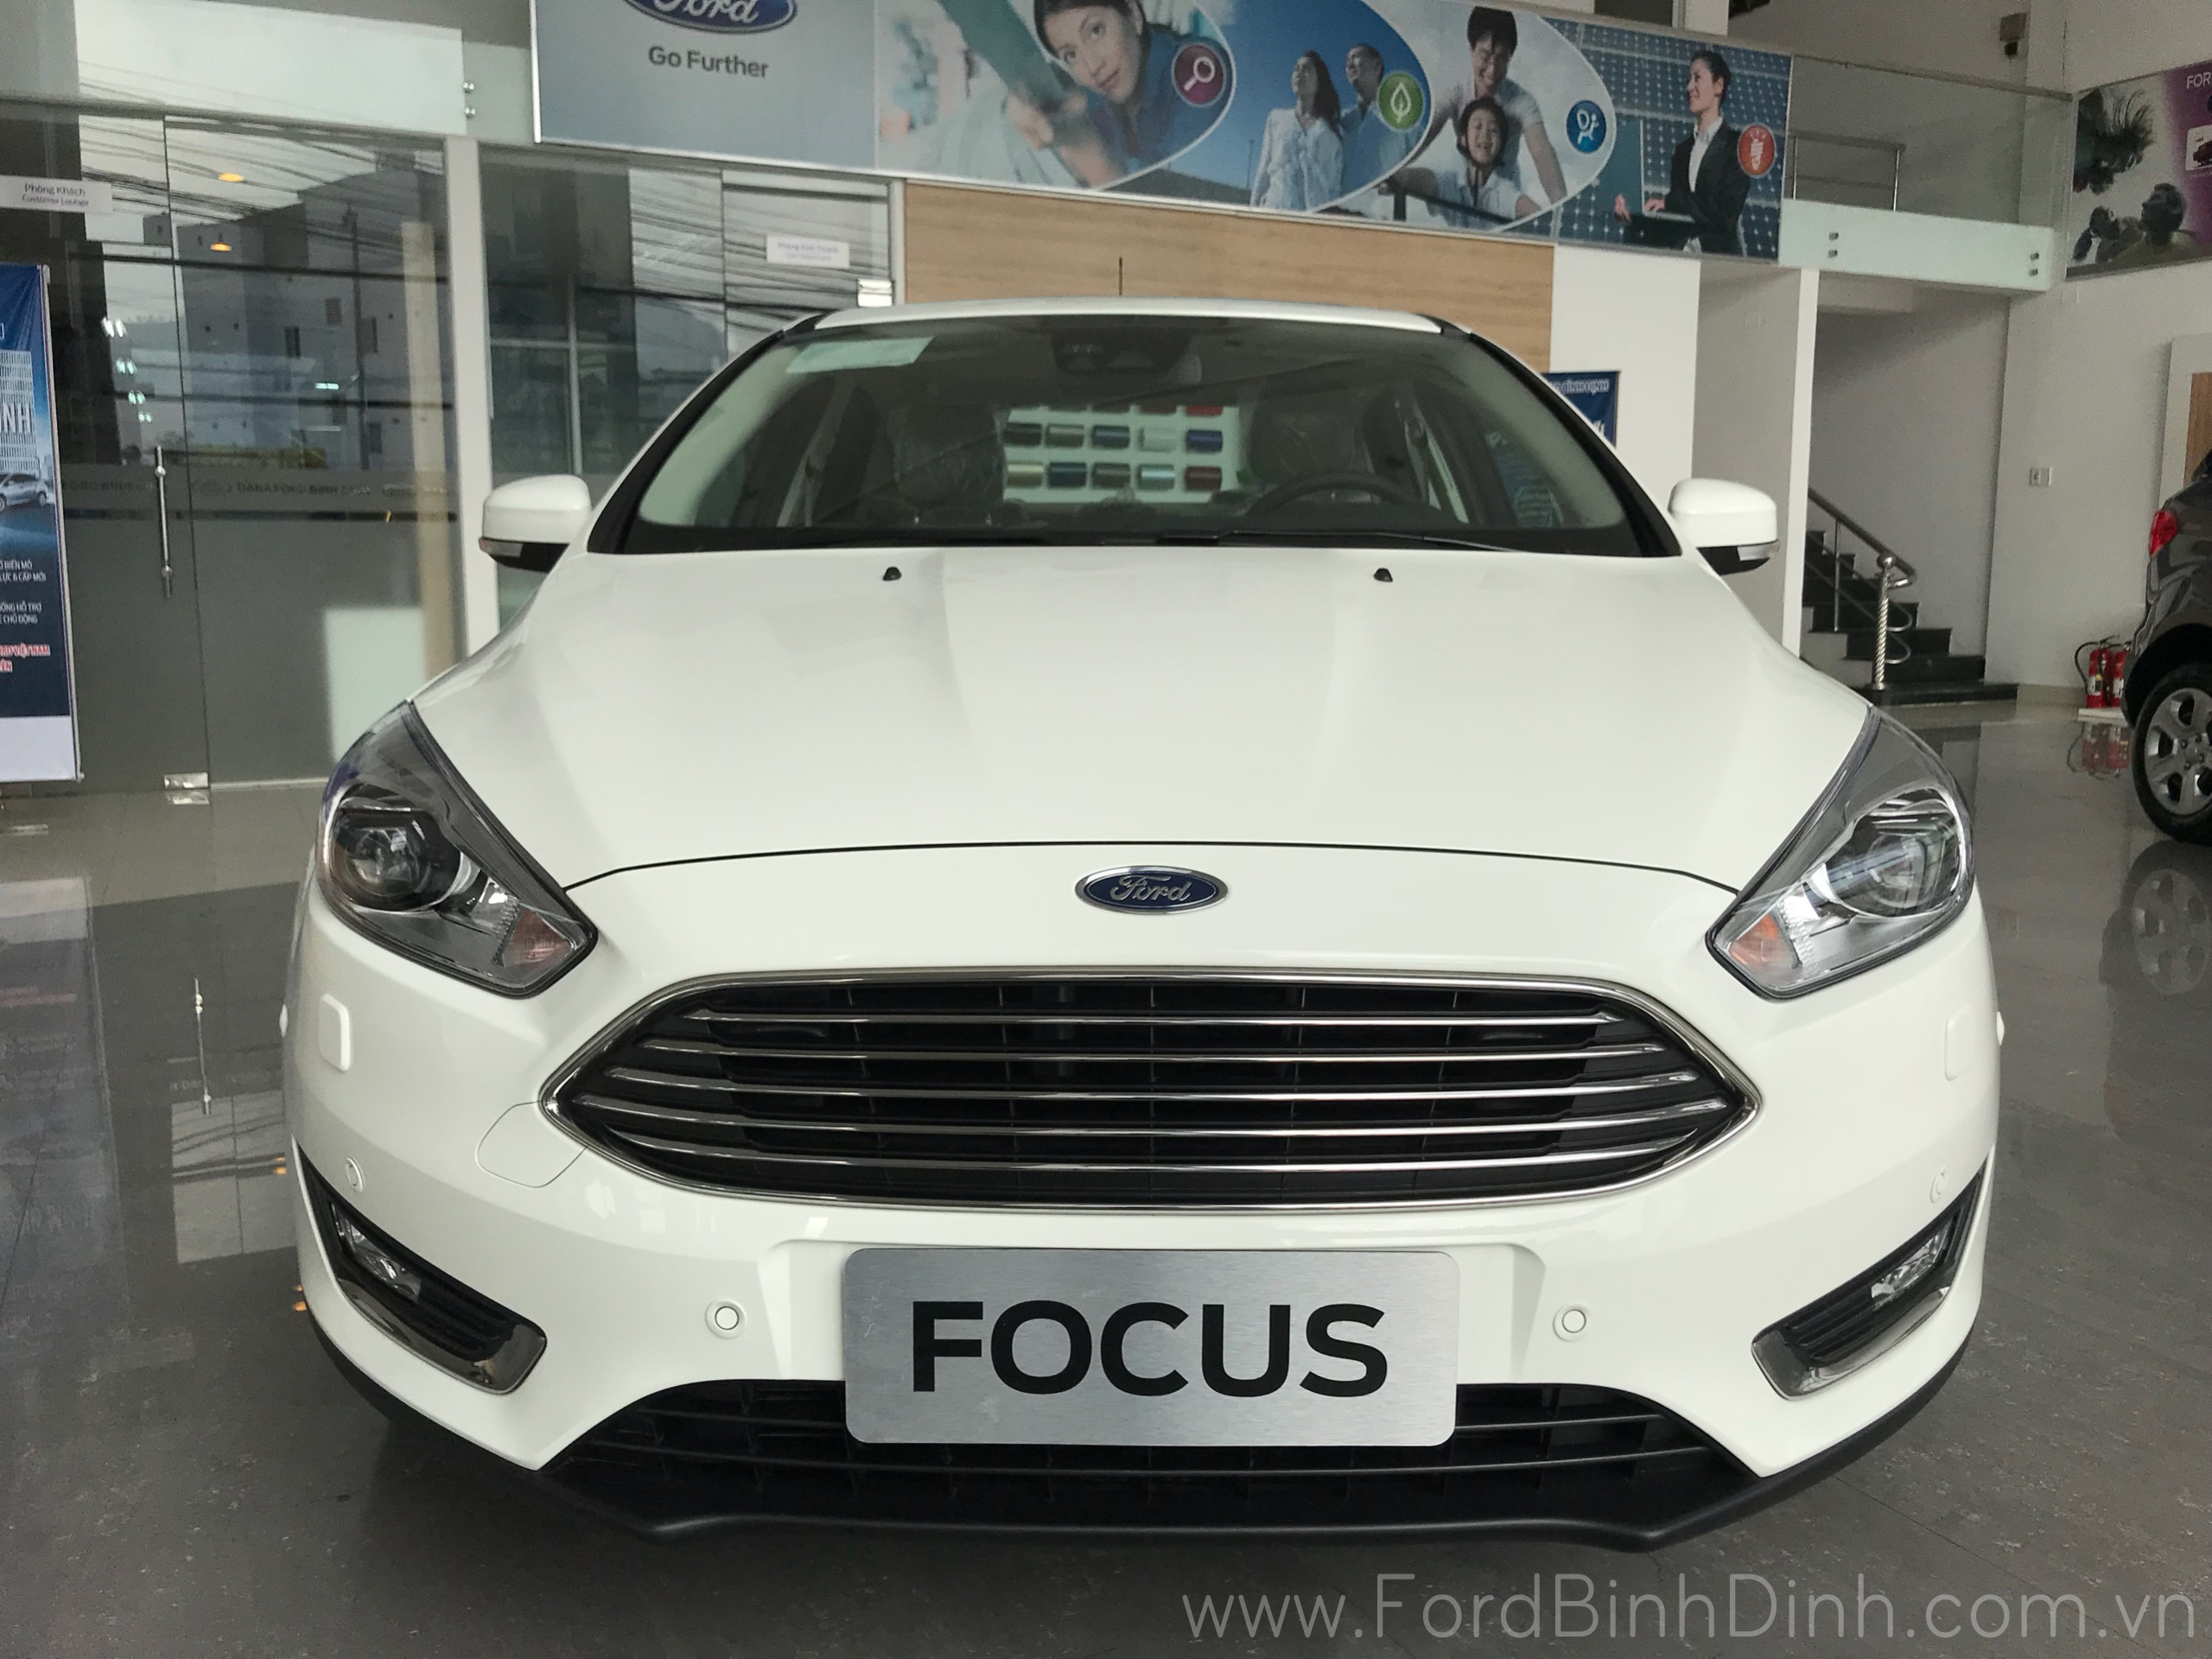 focus-2018-ford-binh-dinh-com-vn-2